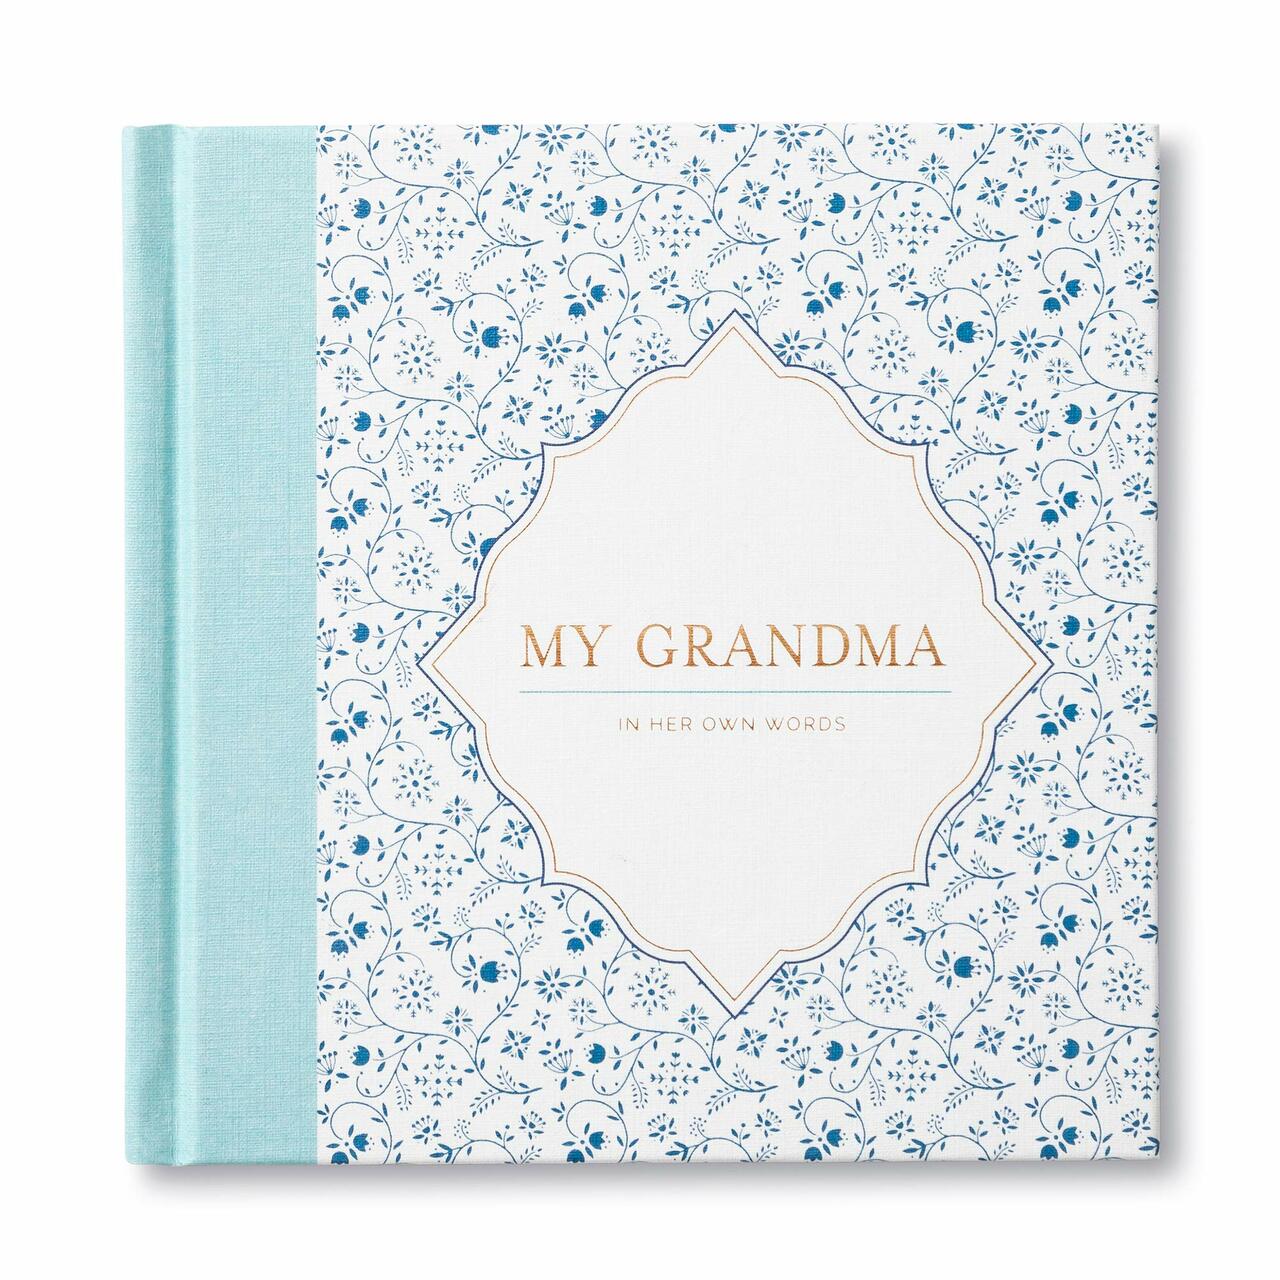 Grandma Interview Journal - My Grandma